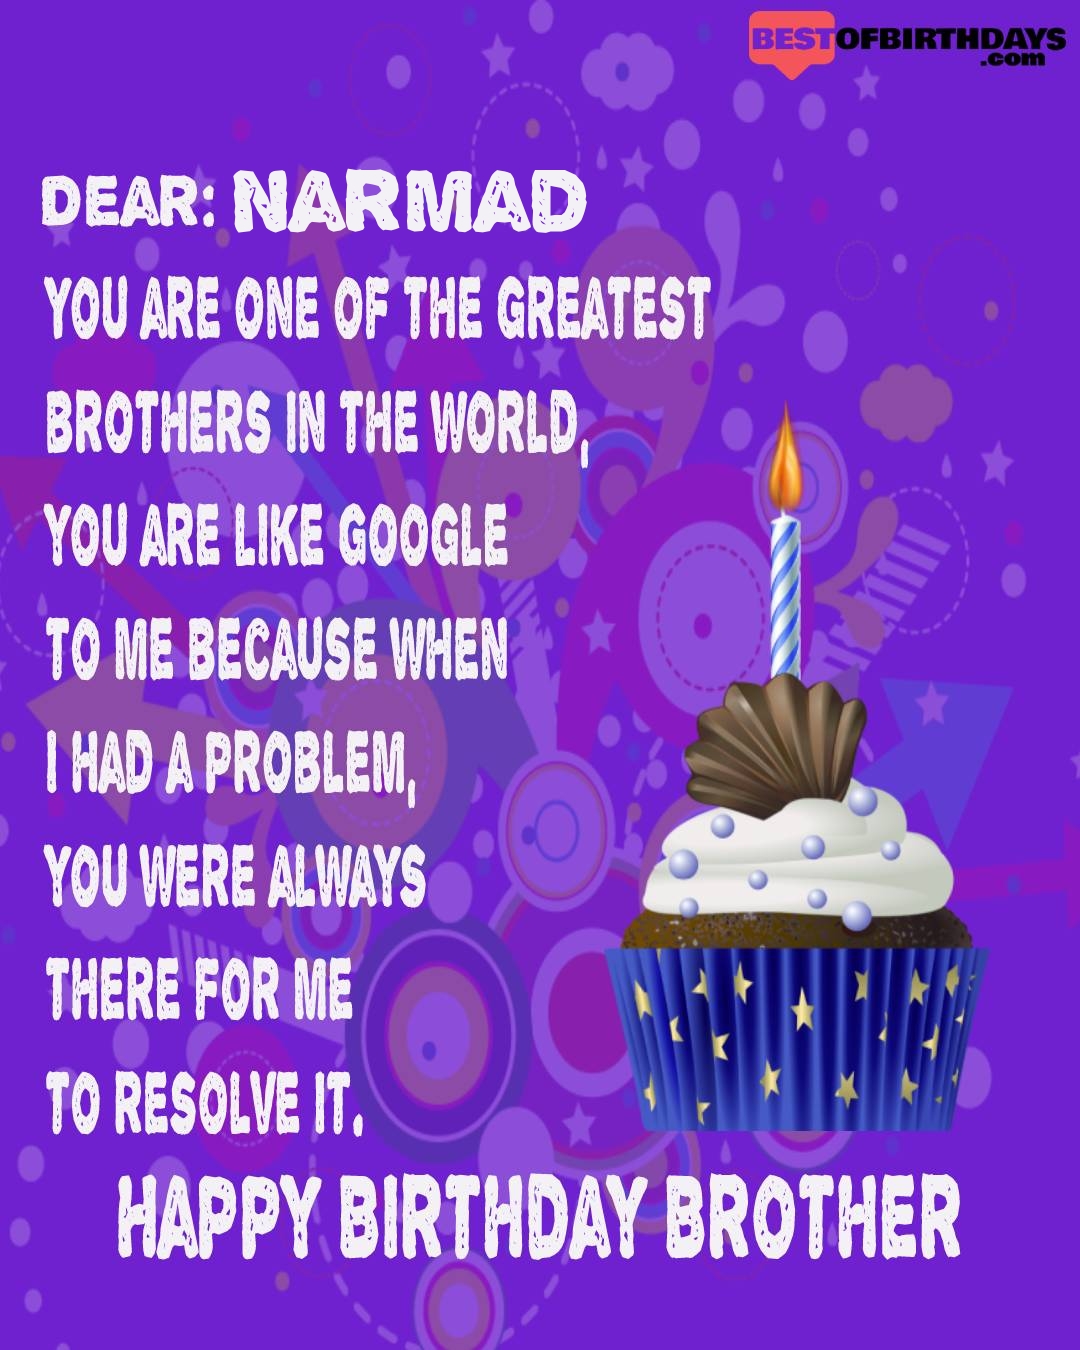 Happy birthday narmad bhai brother bro